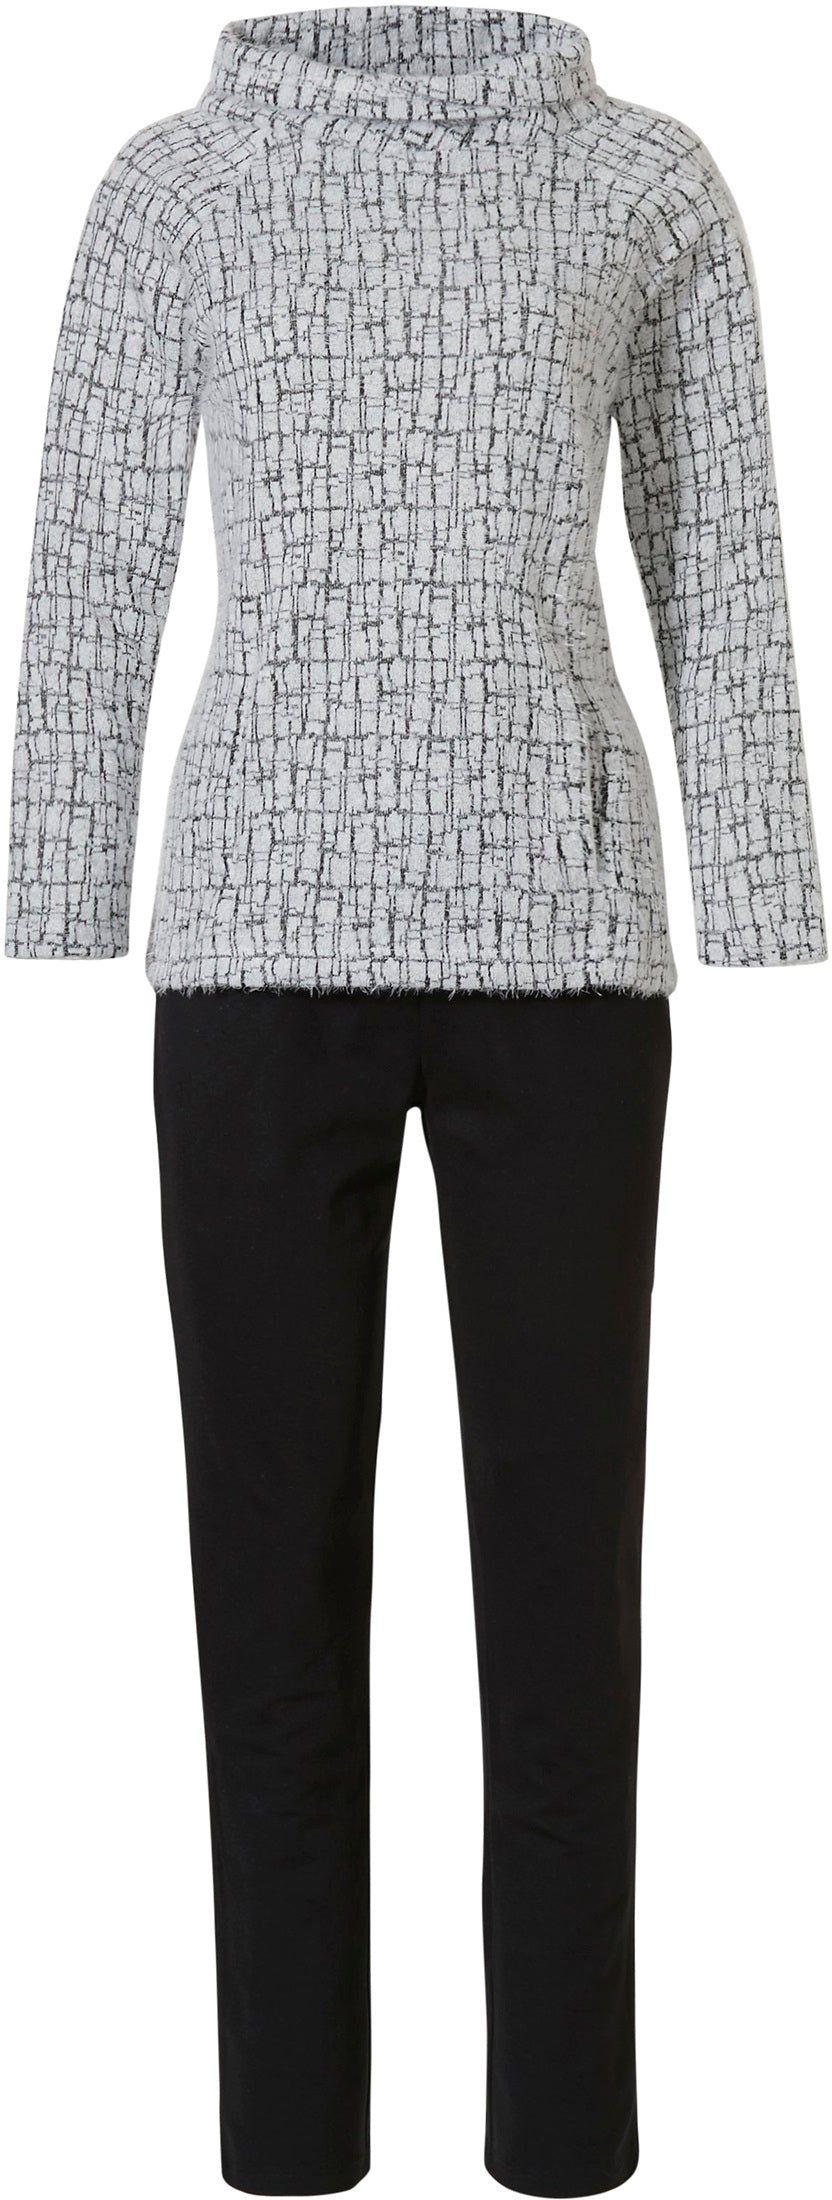 Pastunette Deluxe Ladies Loungewear Set White & Black Long Sleeve Top + Black Pants with White Stripe